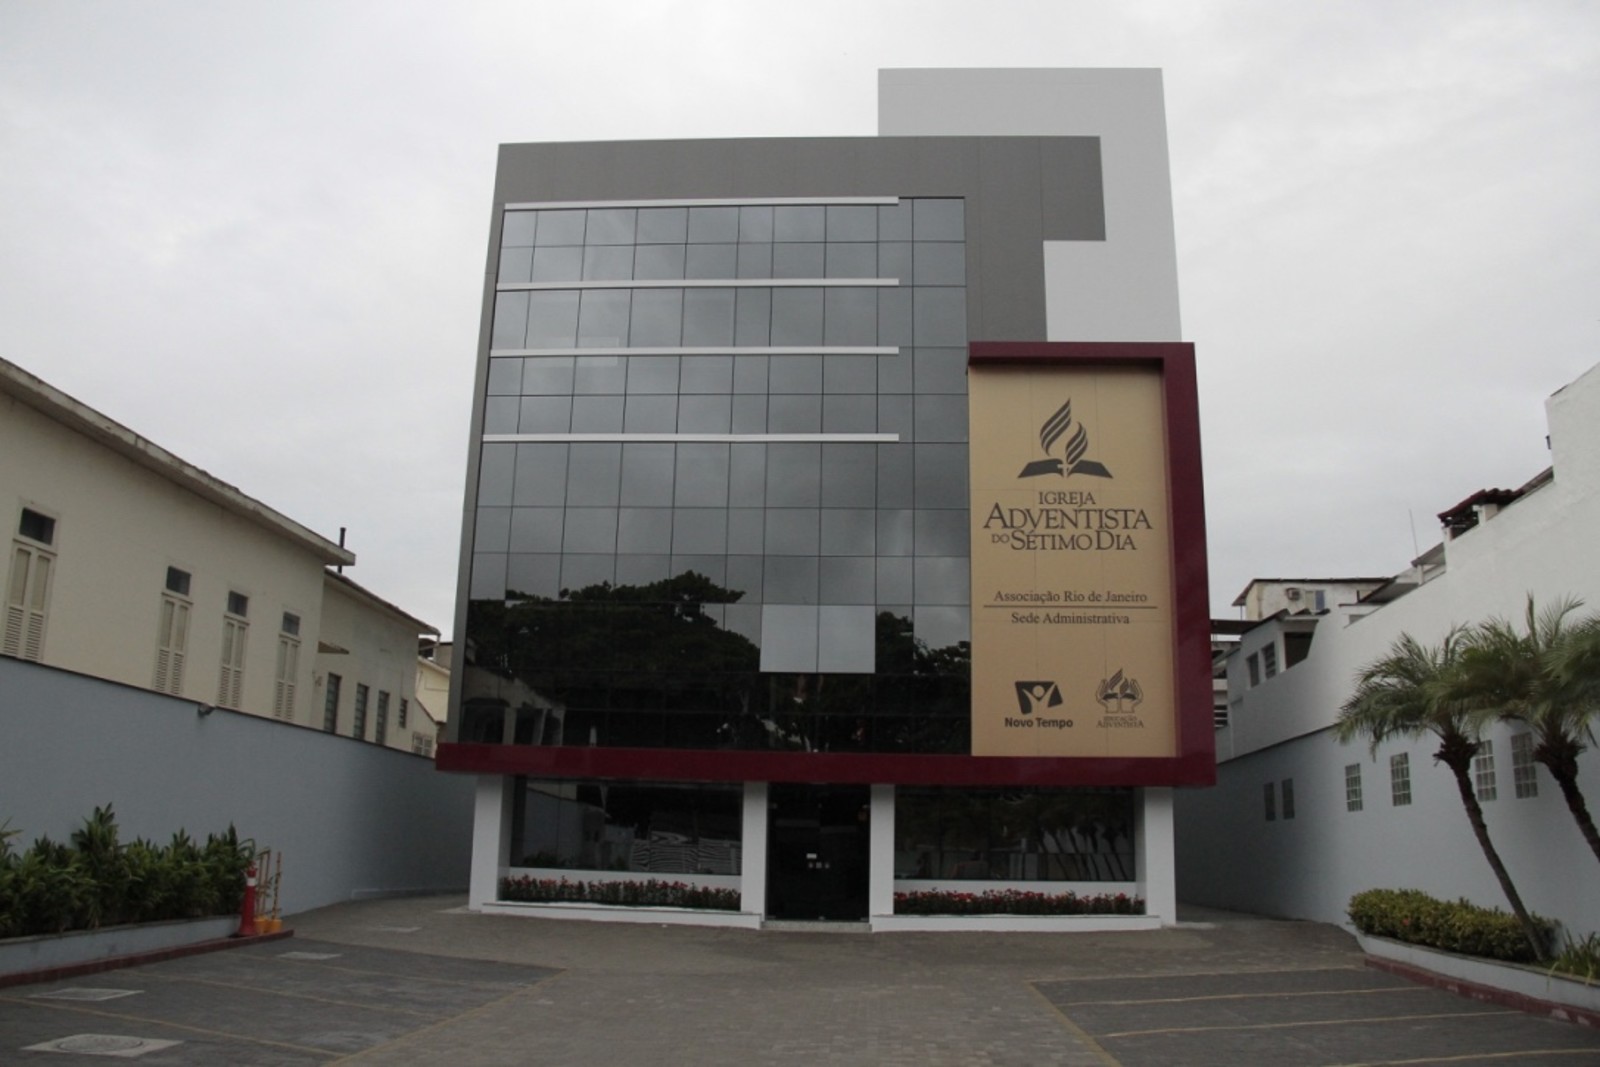 Colégio Adventista de Niterói